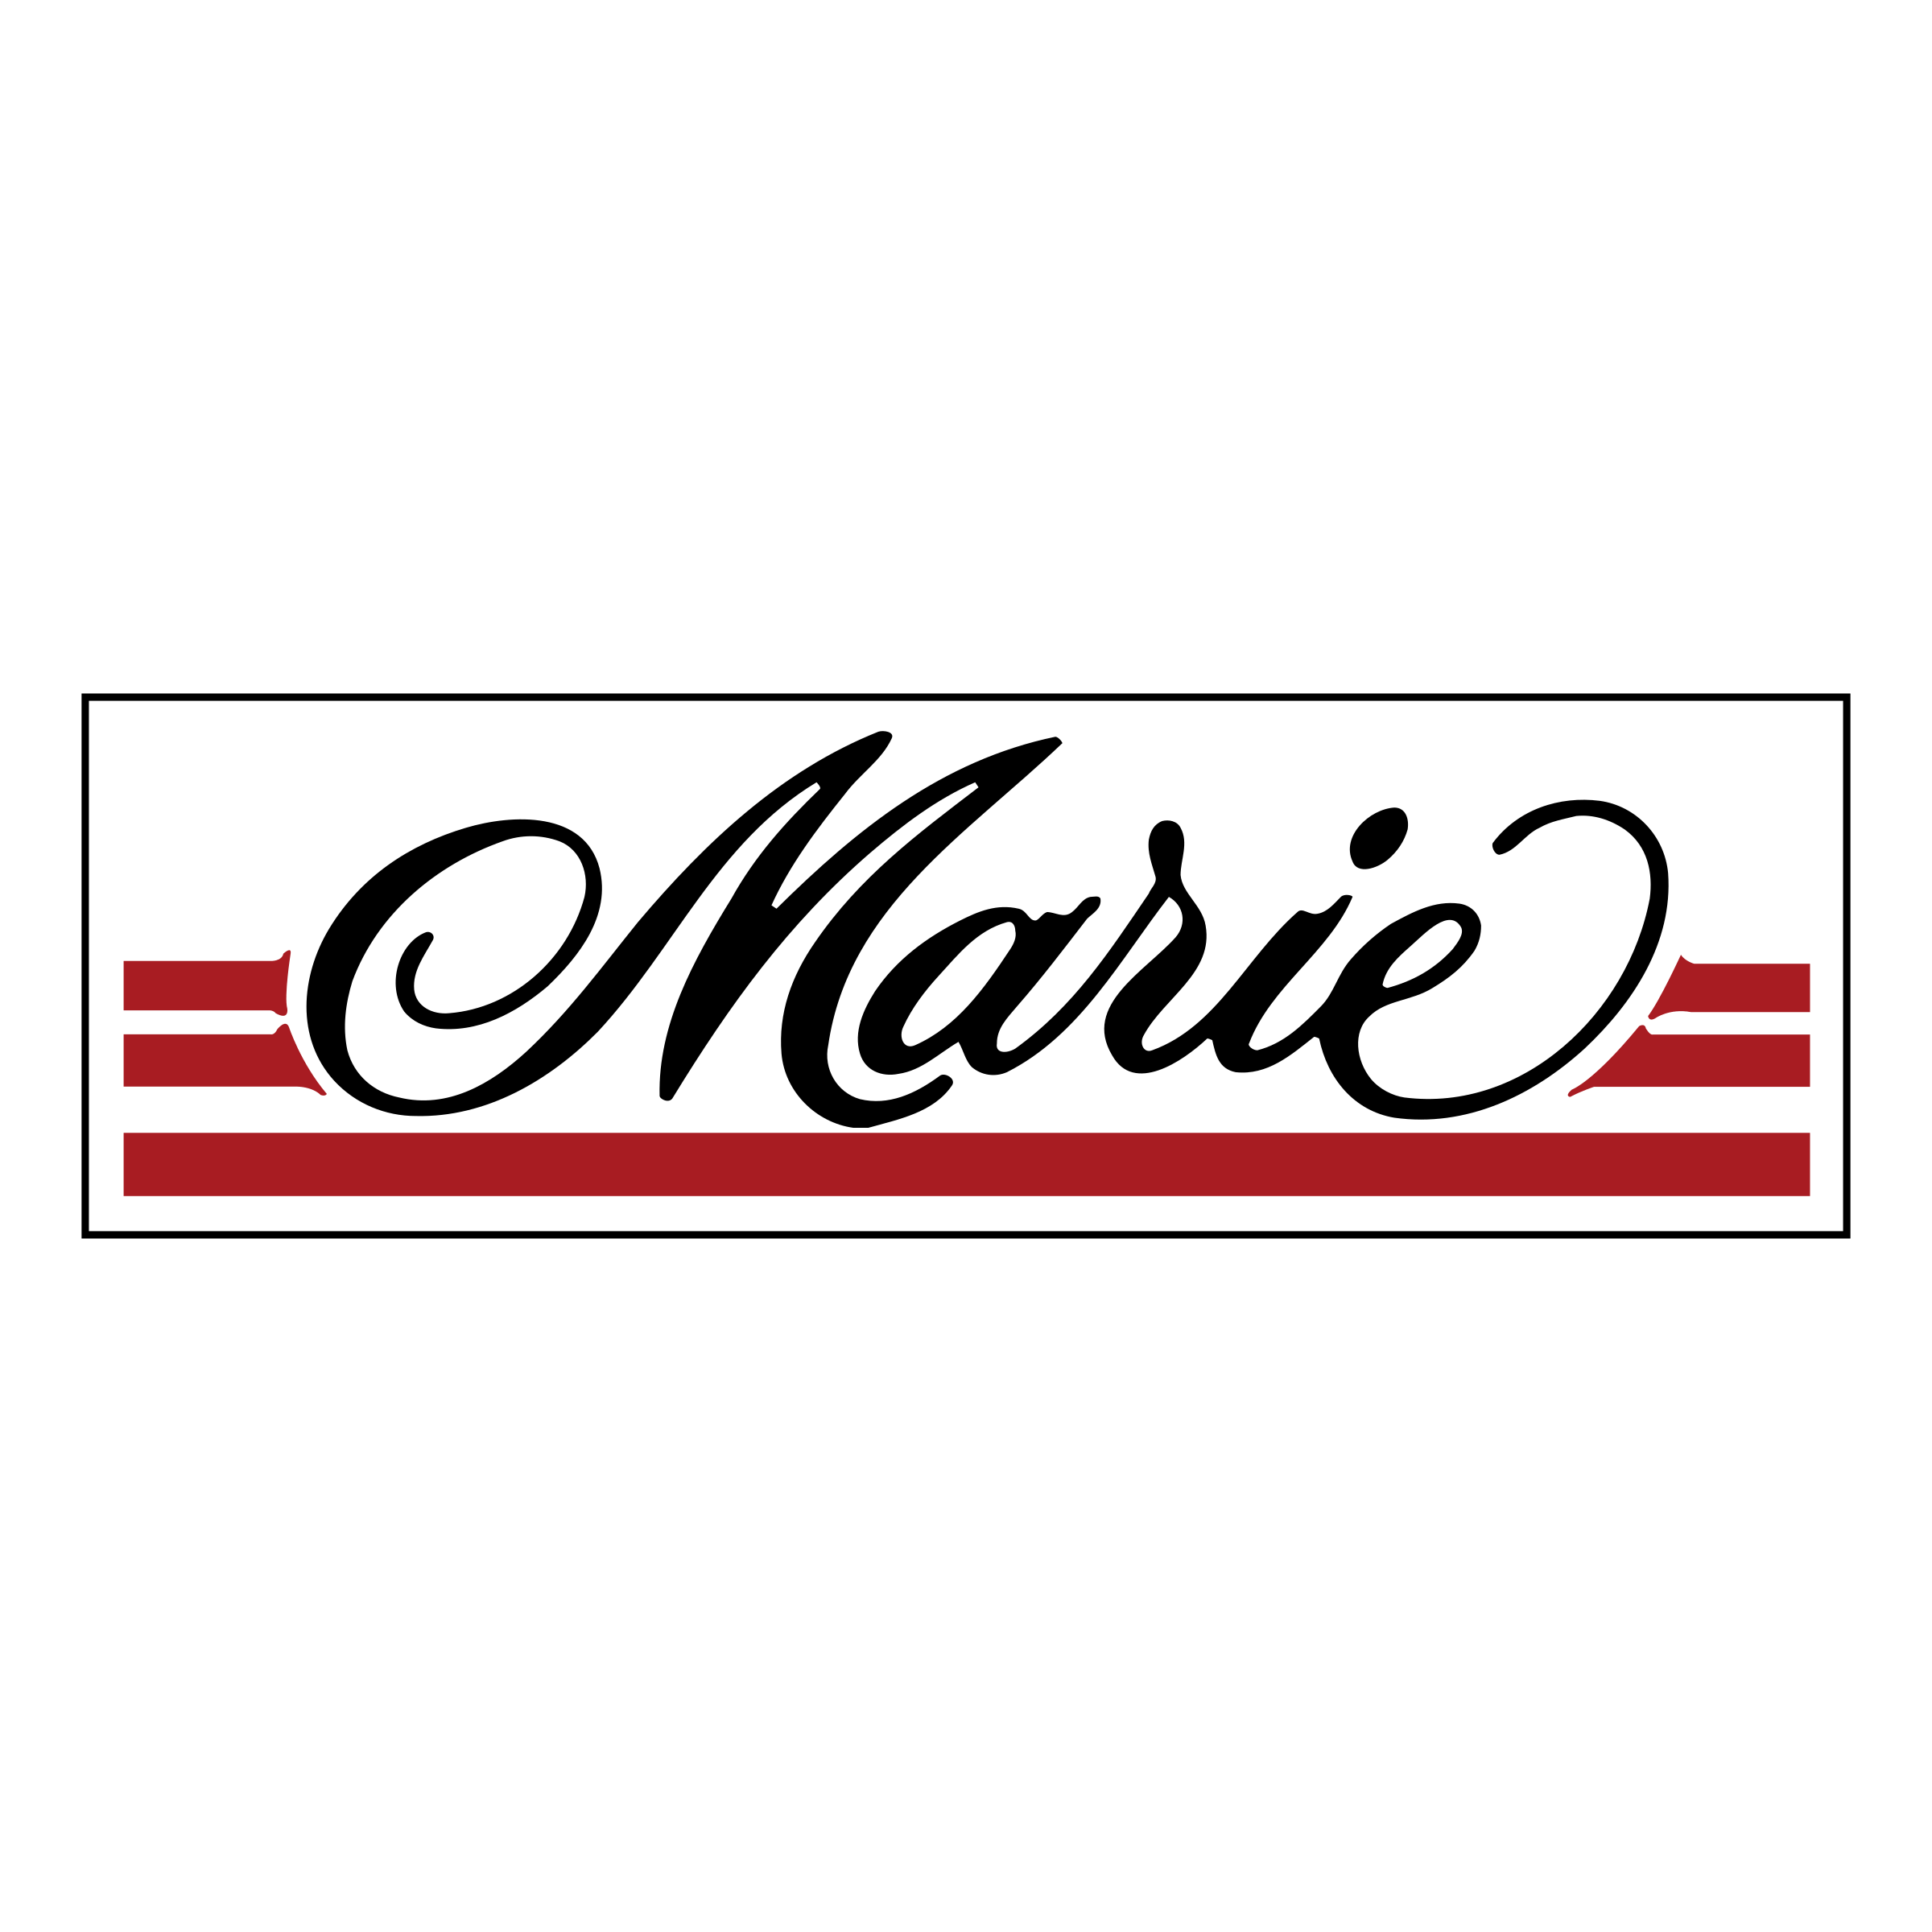 Marie Logo - Marie Logo PNG Transparent & SVG Vector